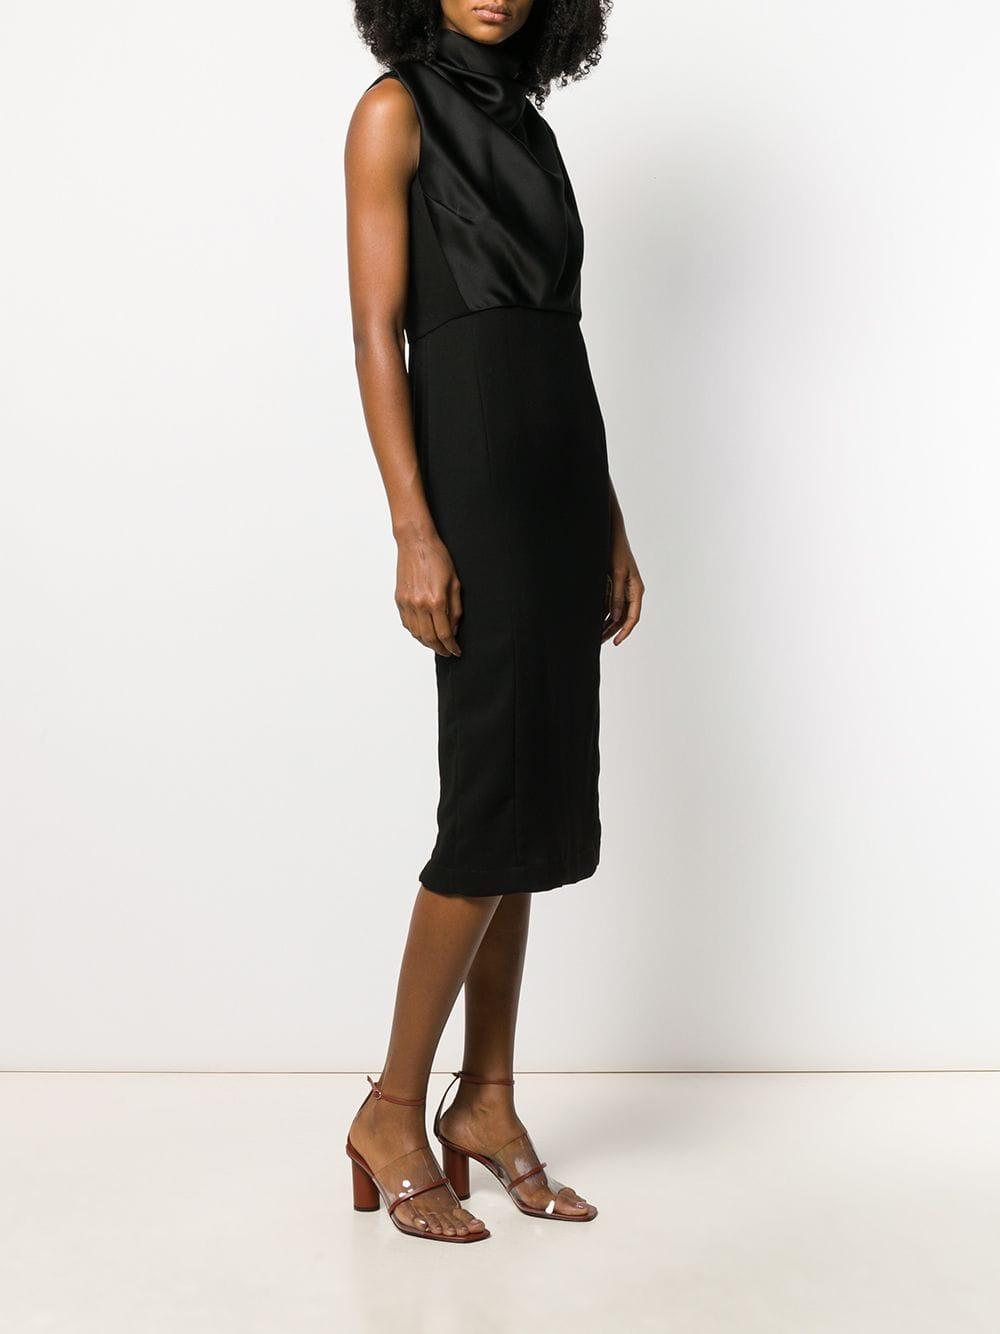 Erika Cavallini Semi Couture Satin Draped Neck Dress in Black - Lyst